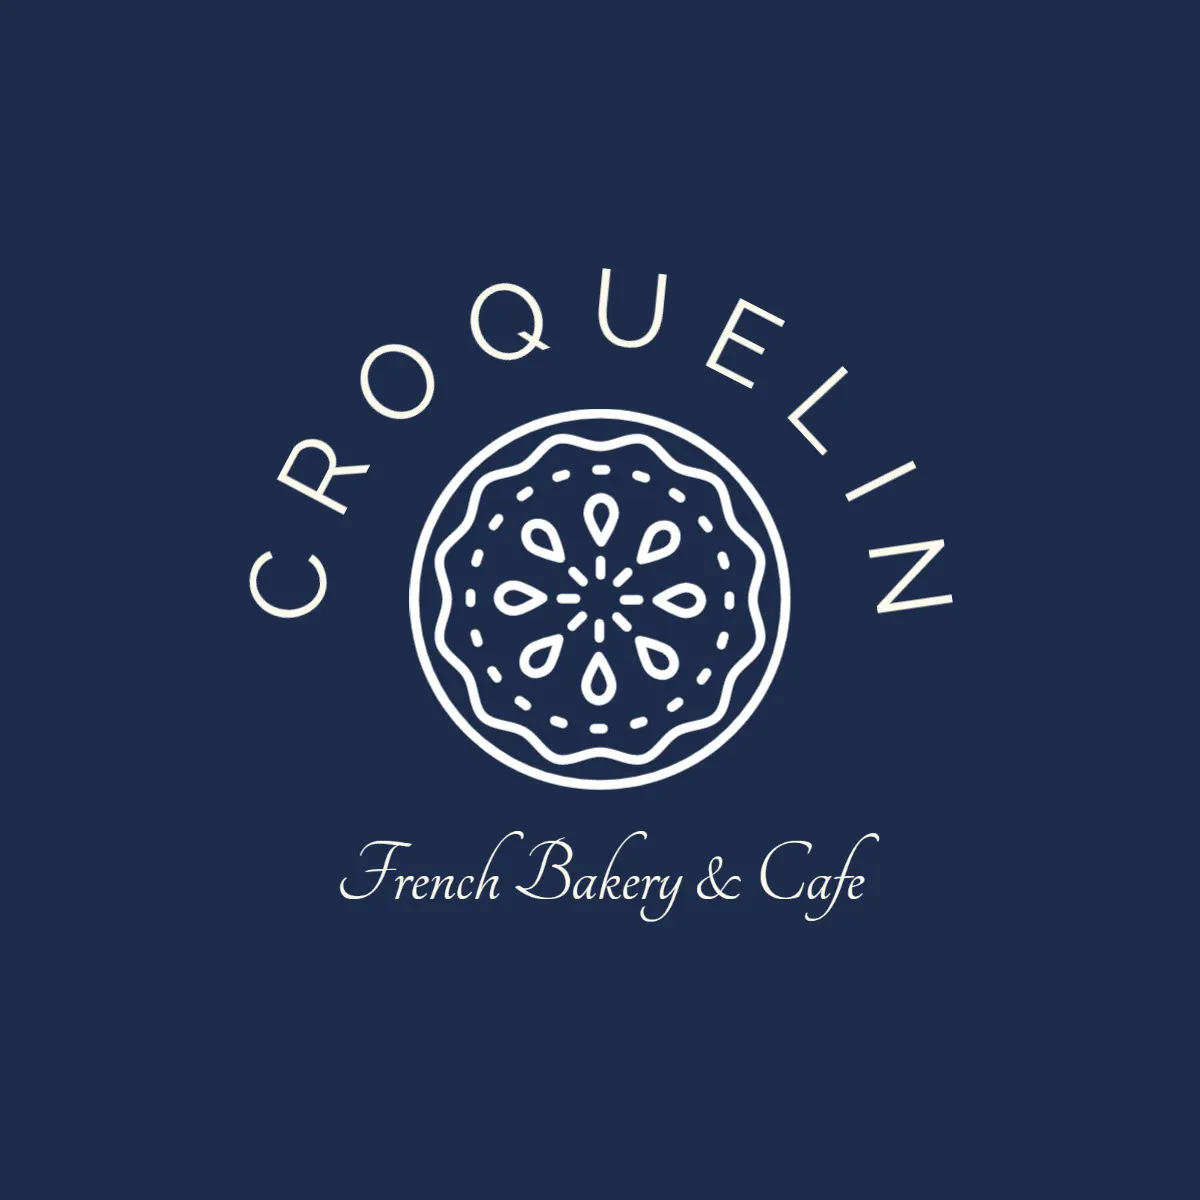 Dark Blue and White French Bakery & Cafe Logo